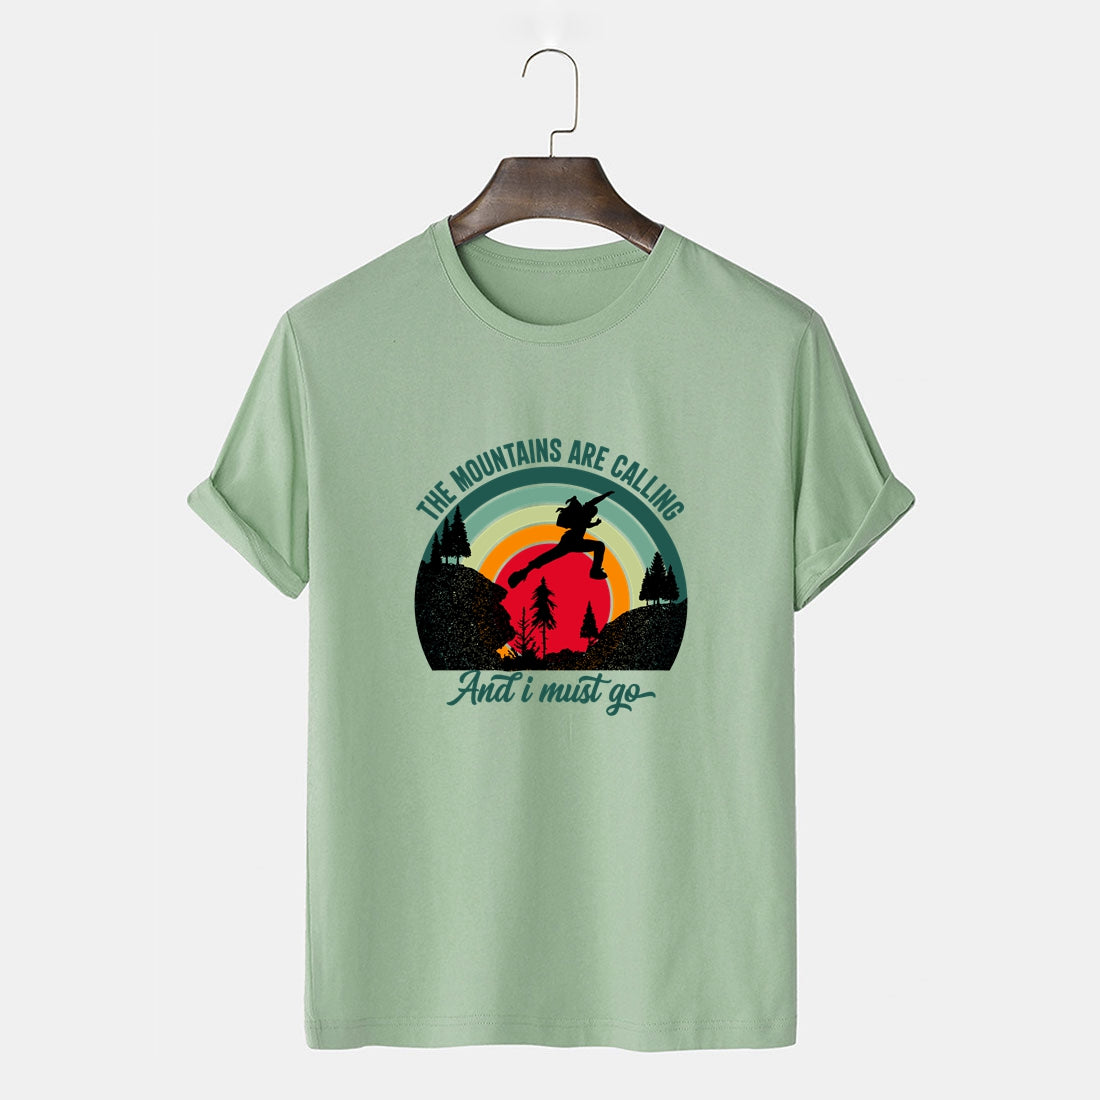 Hiking Graphic Tee Shirt Crewneck Tee Cotton Tops Single Side Print